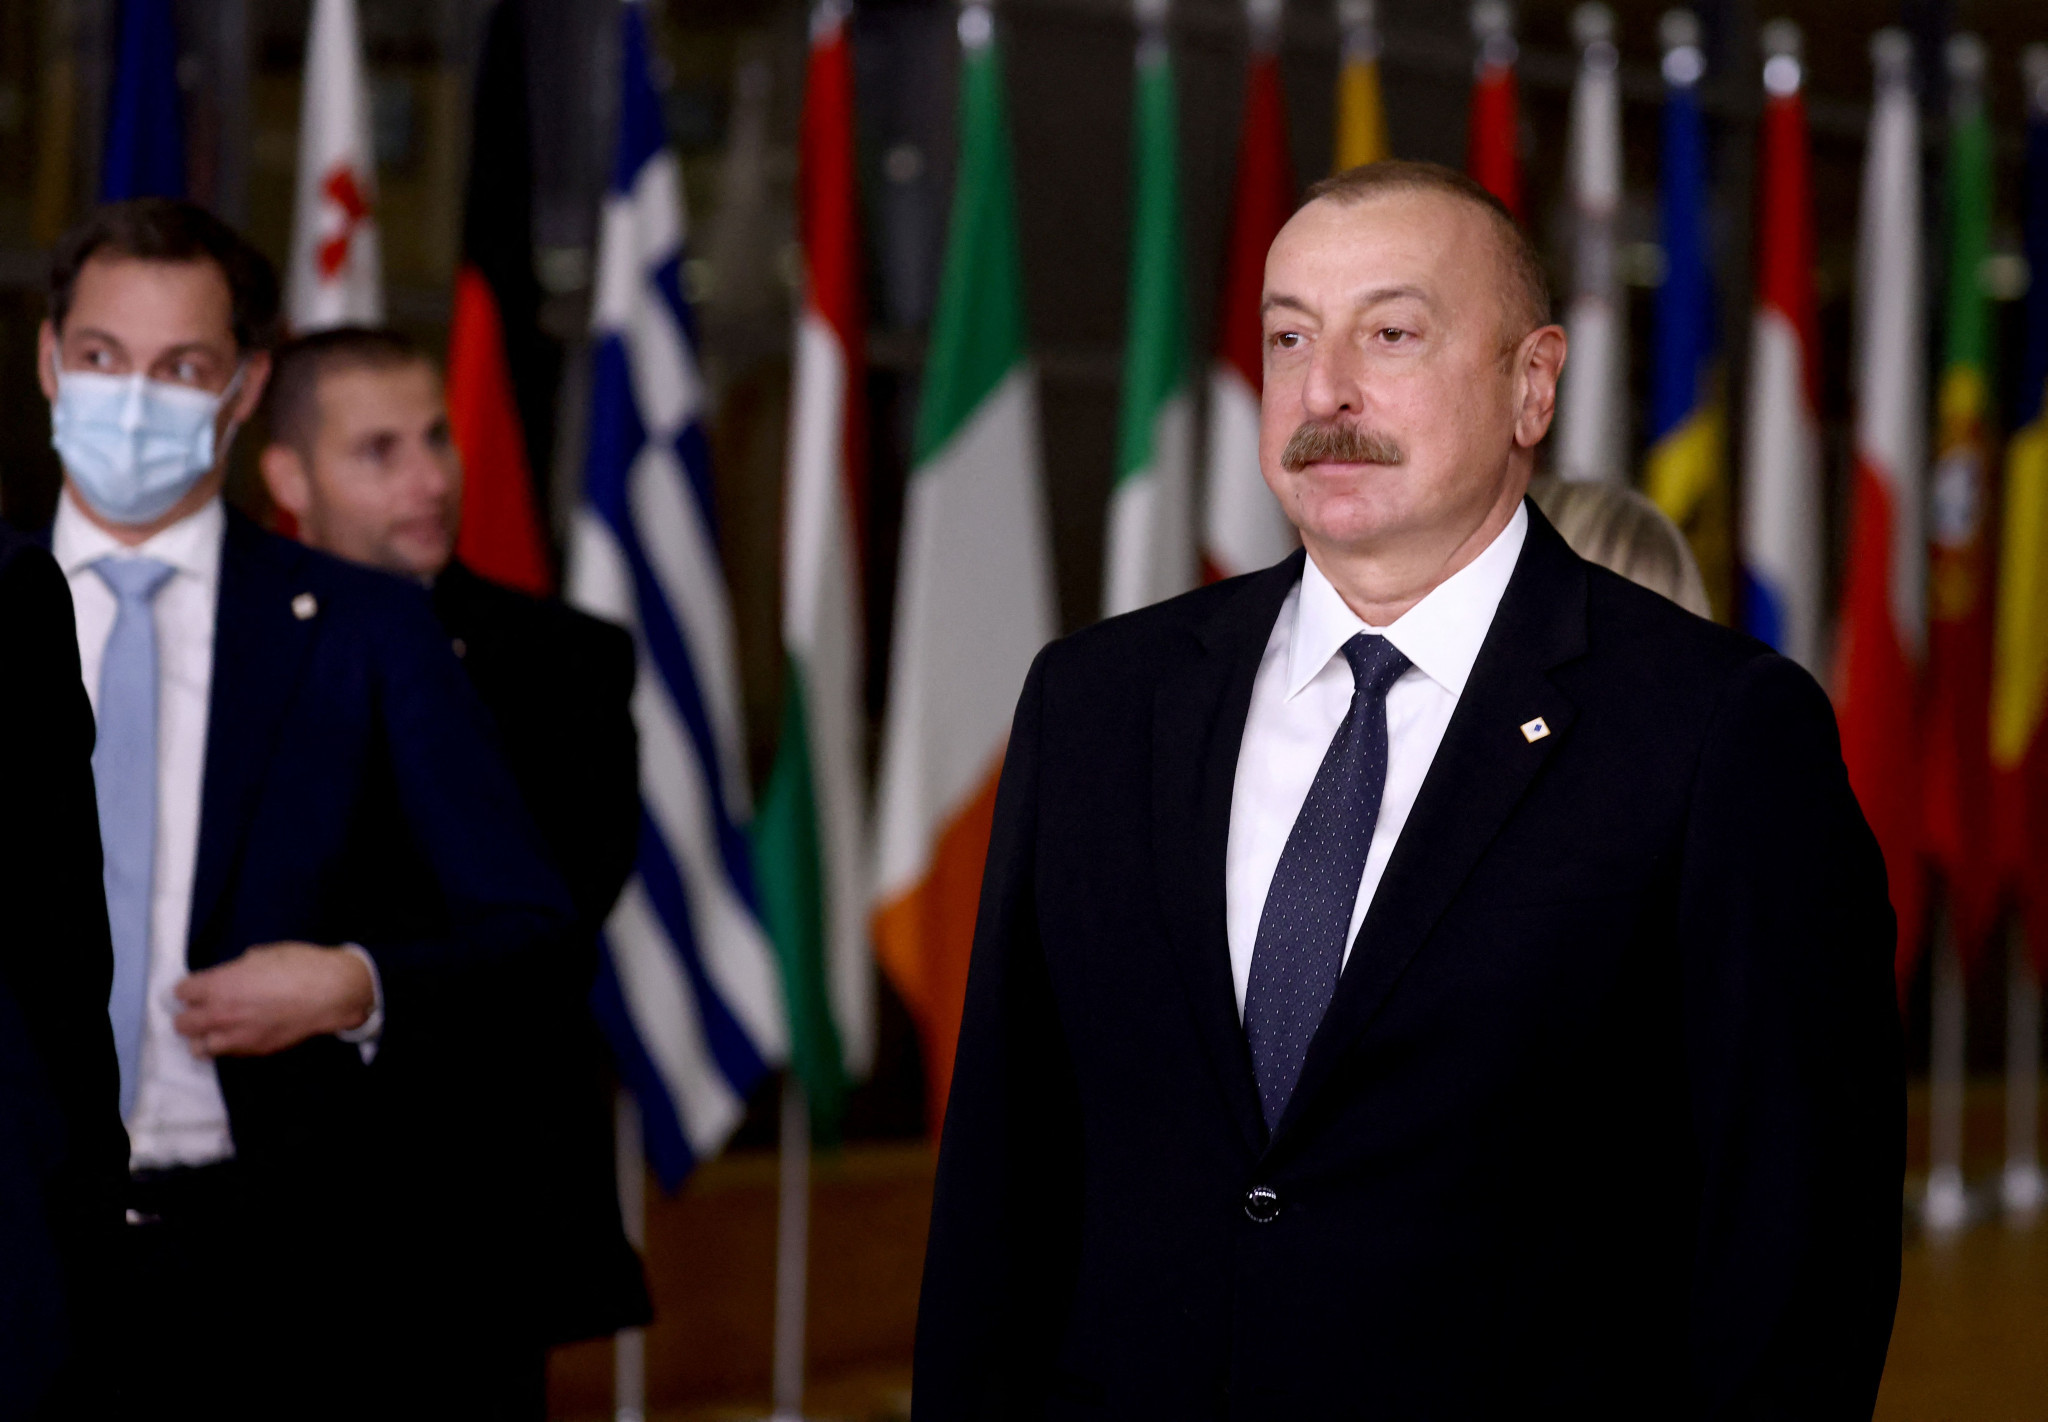 Azerbaijan President Aliyev re-elected as NOC head